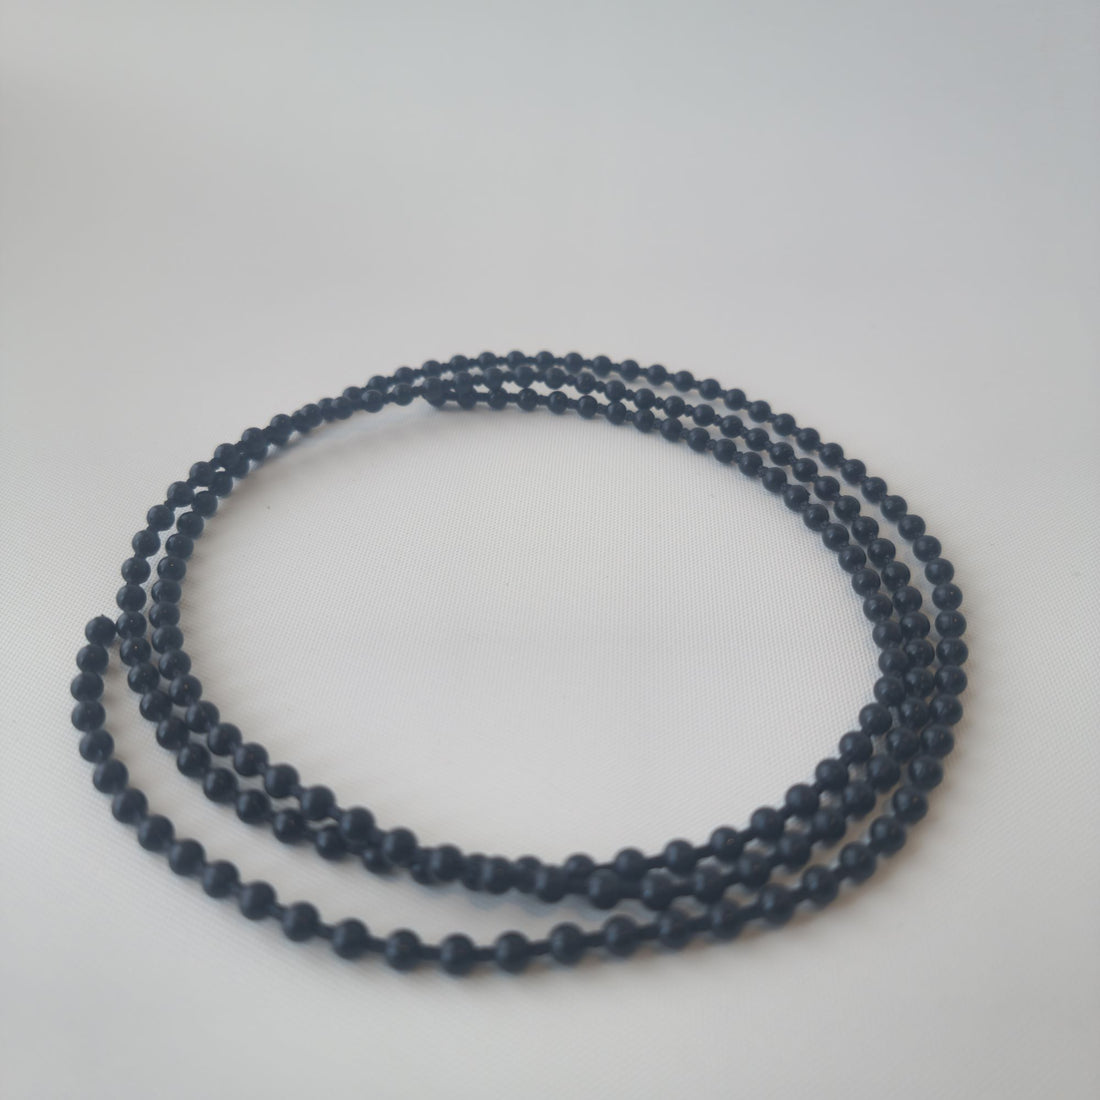 Roller Blind plastic chain - 10 metres - black